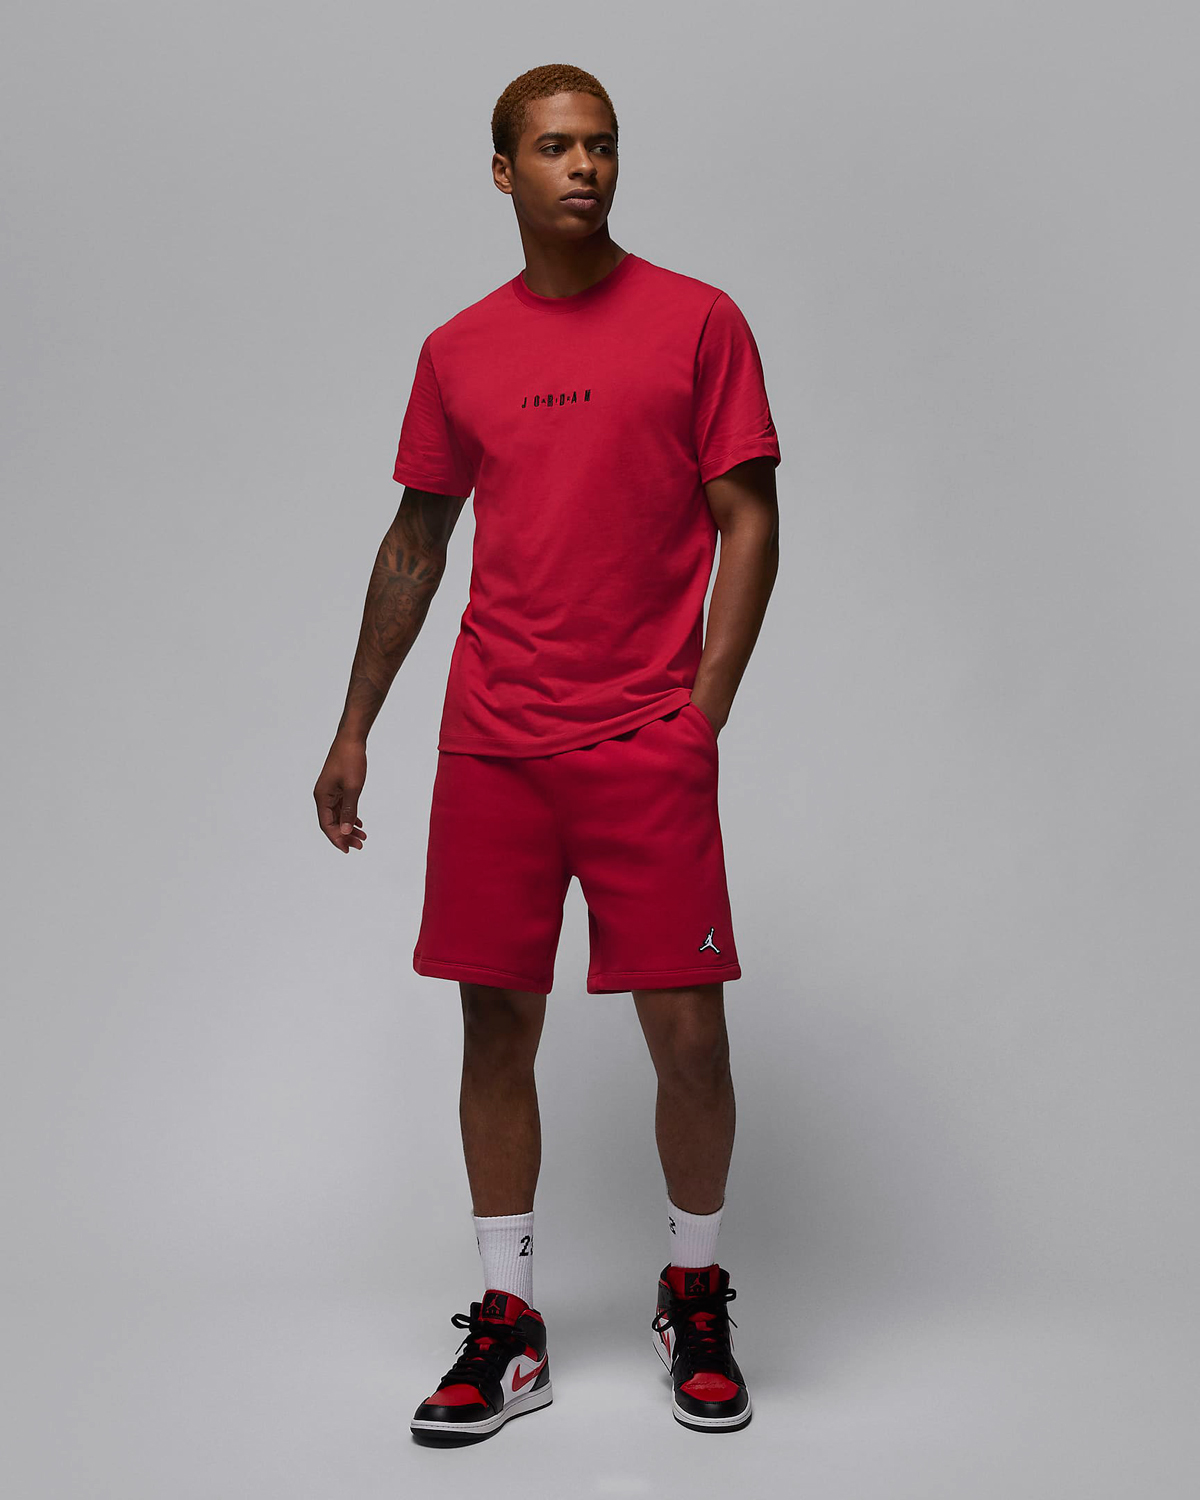 Jordan-Air-T-Shirt-Gym-Red-Black-Outfit